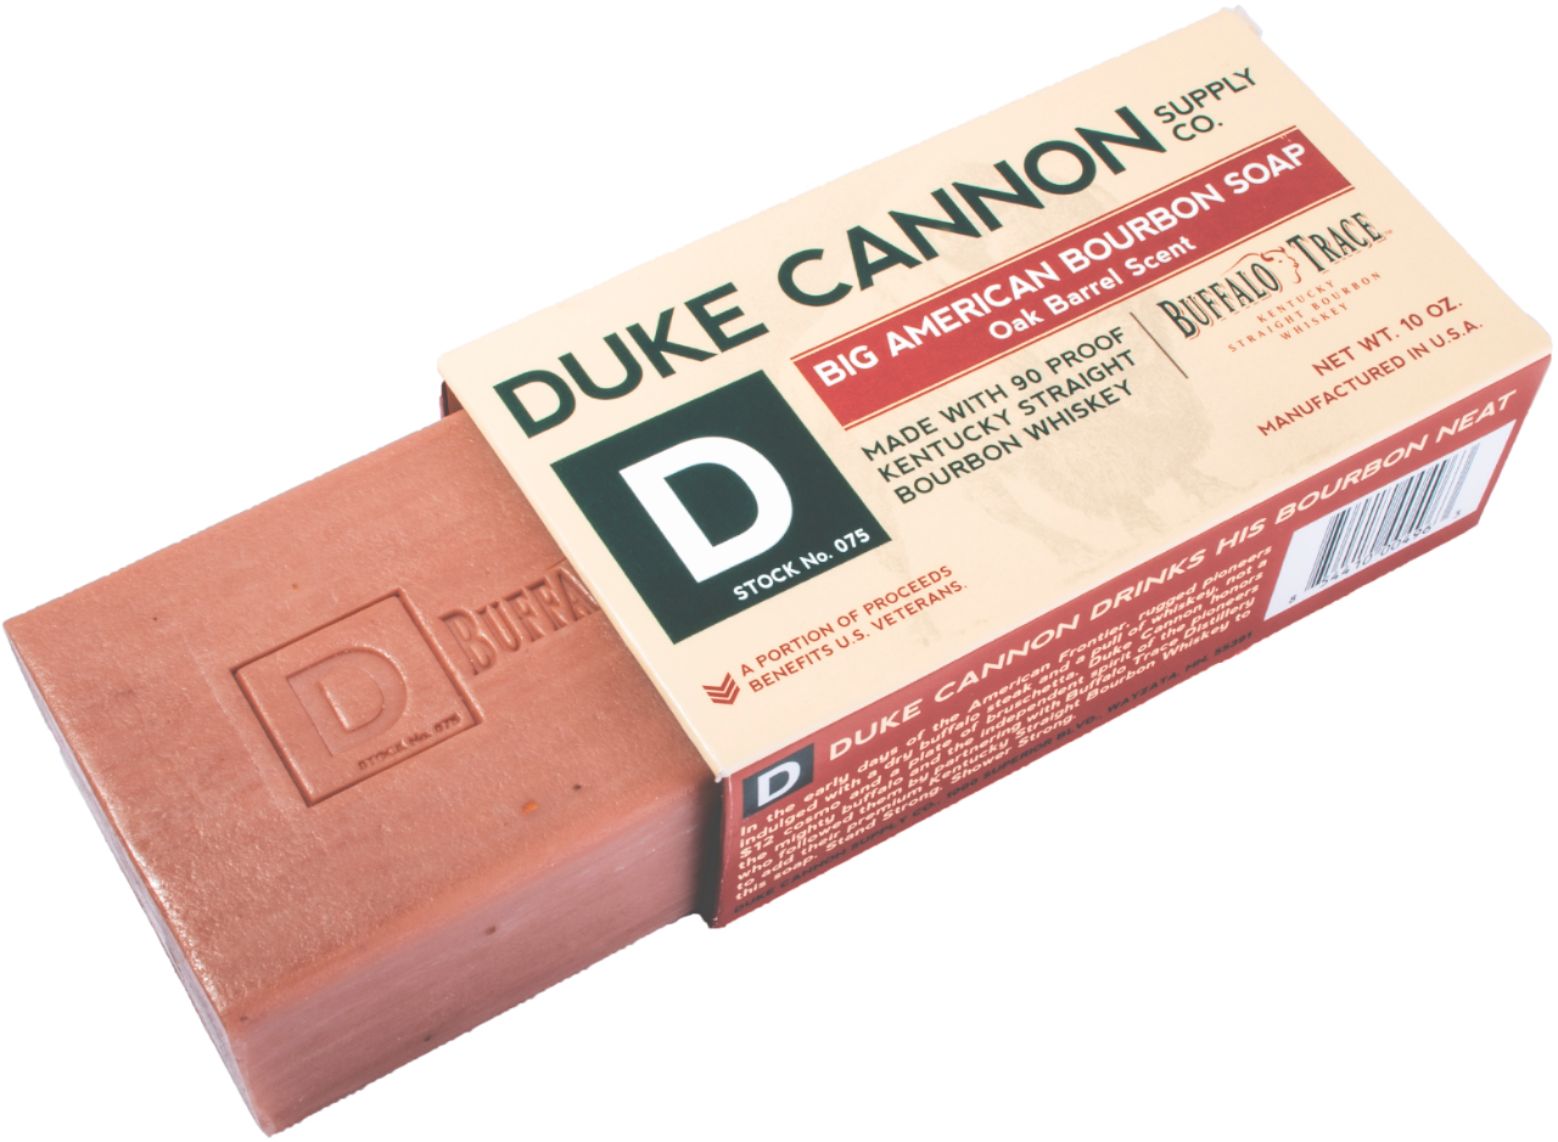 Duke Cannon Big Ass Brick of Soap Smells Like Productivity White 03WHITE1 -  Best Buy